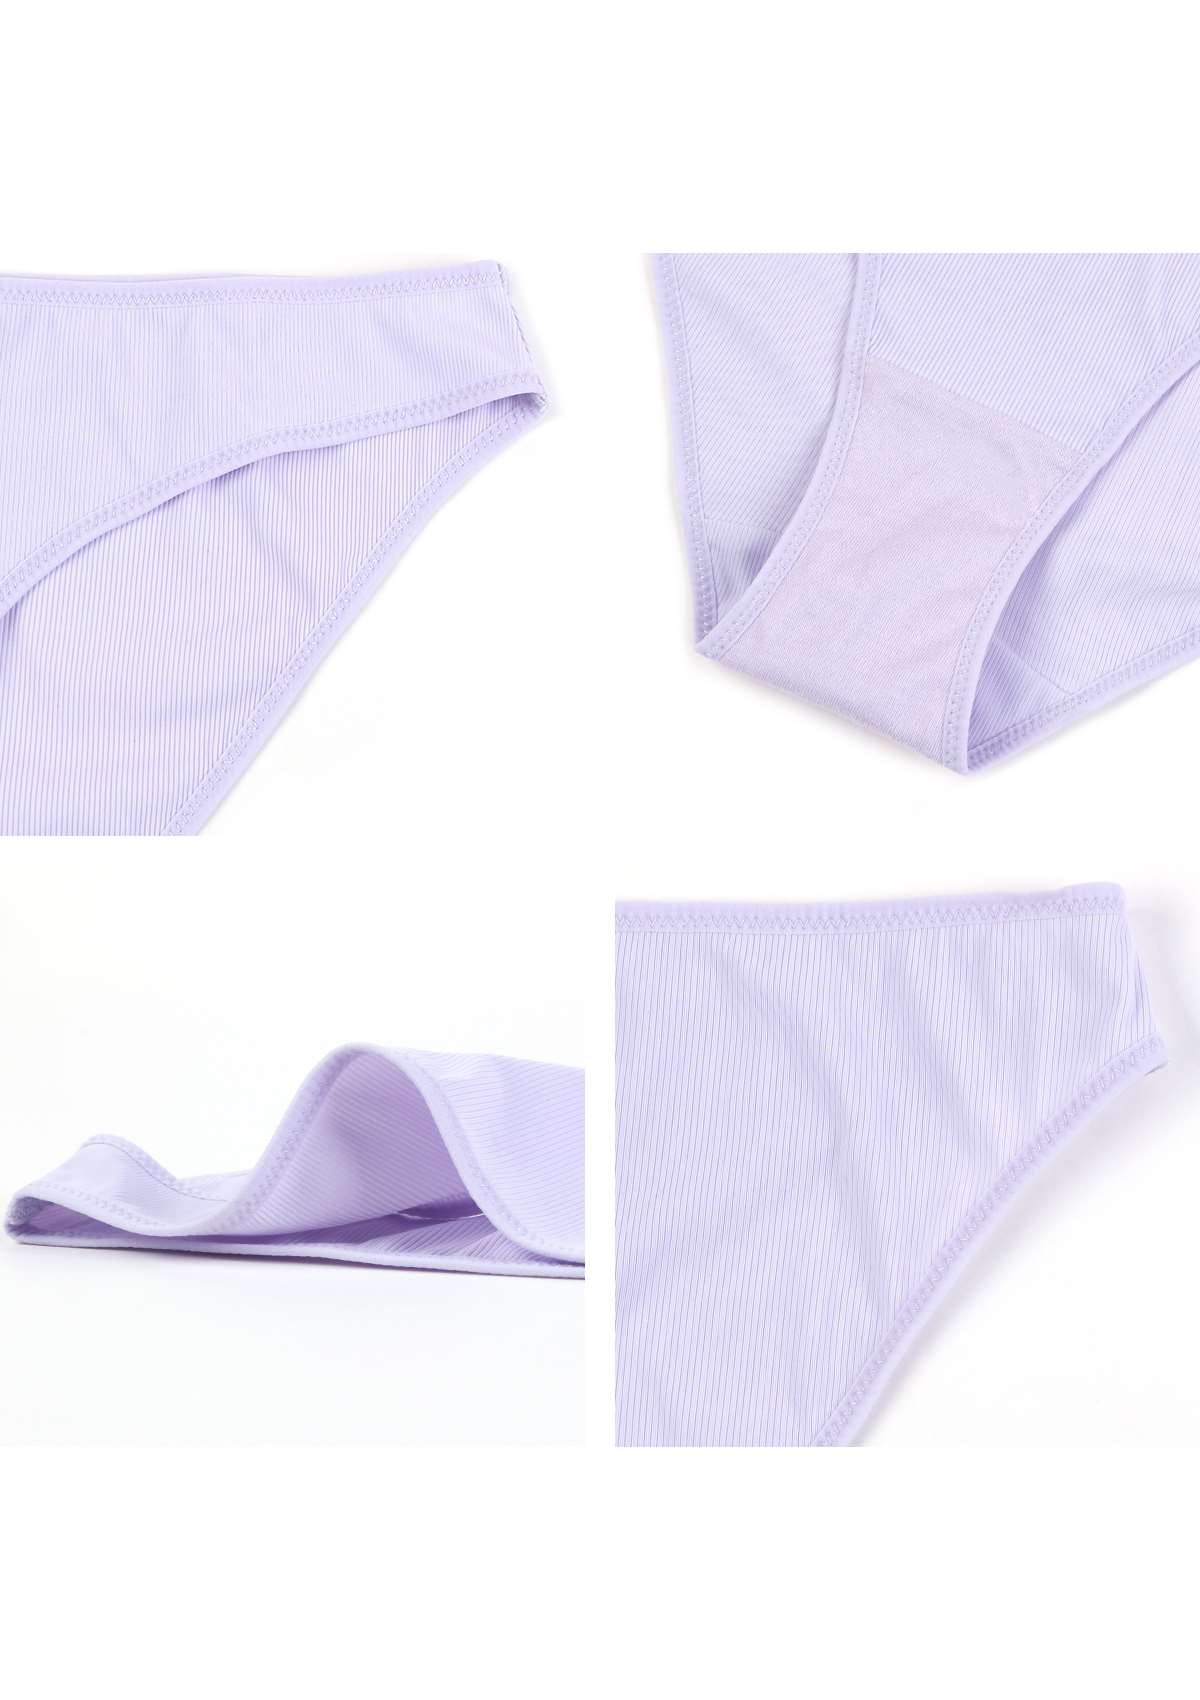 HSIA Ribbed Knit Cotton Bikini Underwear 3 Pack - L / Dark Gray+Pink Beige+Purple